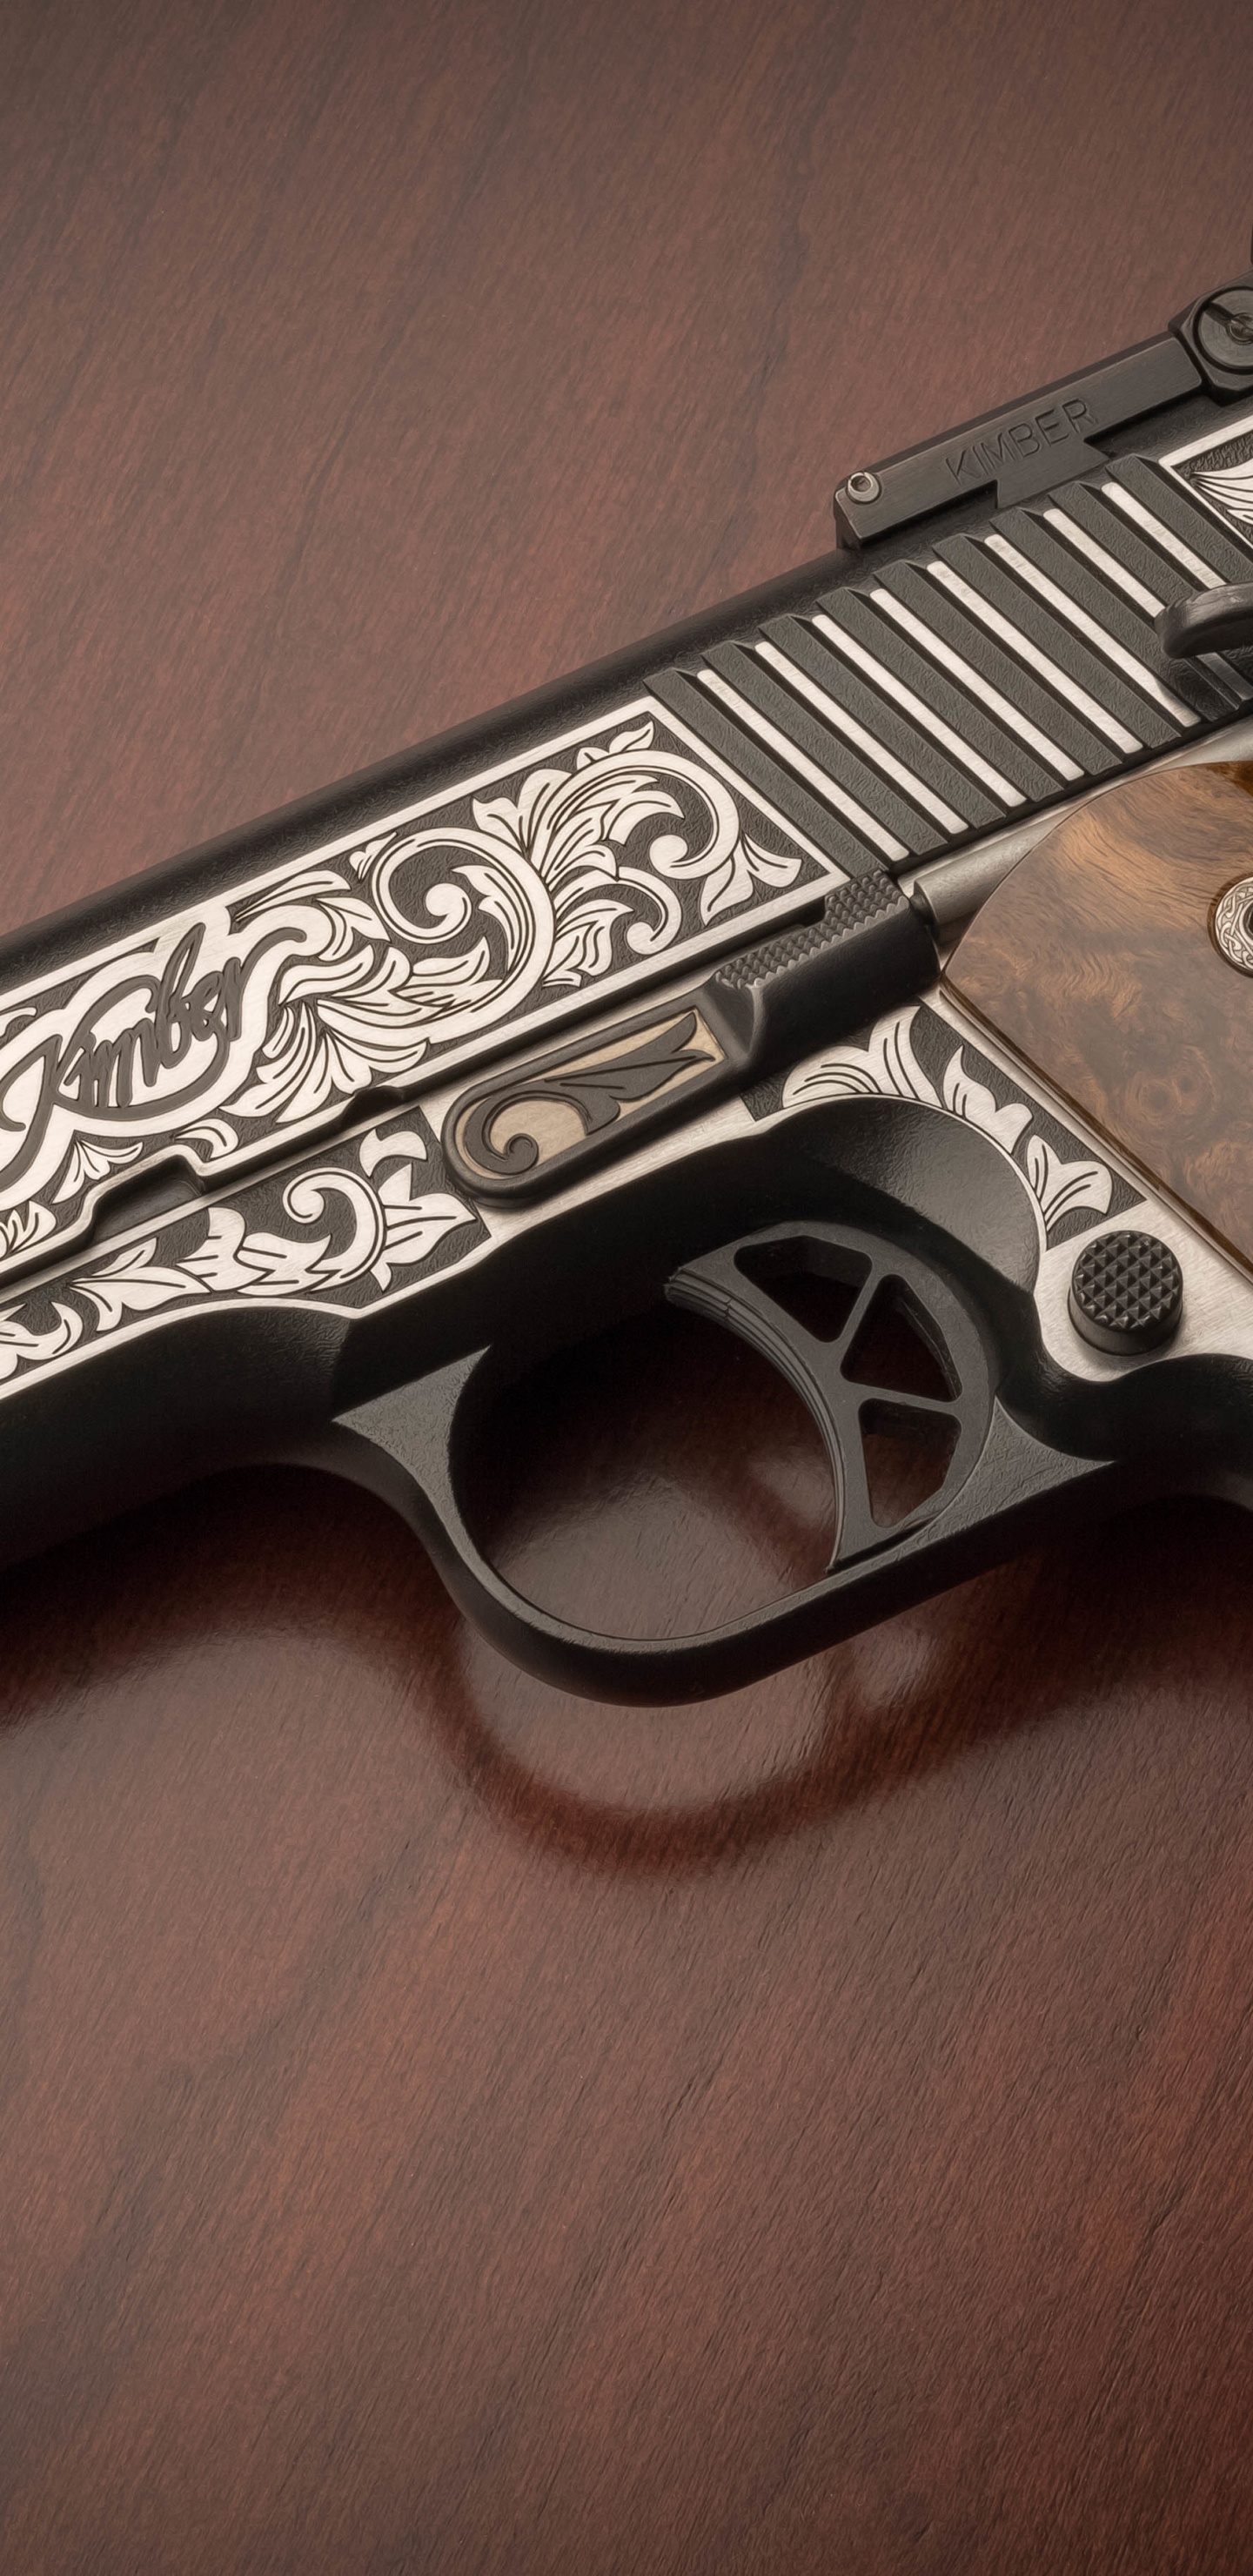 M1911 Pistol, Gun, Firearm, Trigger, Gun Barrel. Wallpaper in 1440x2960 Resolution